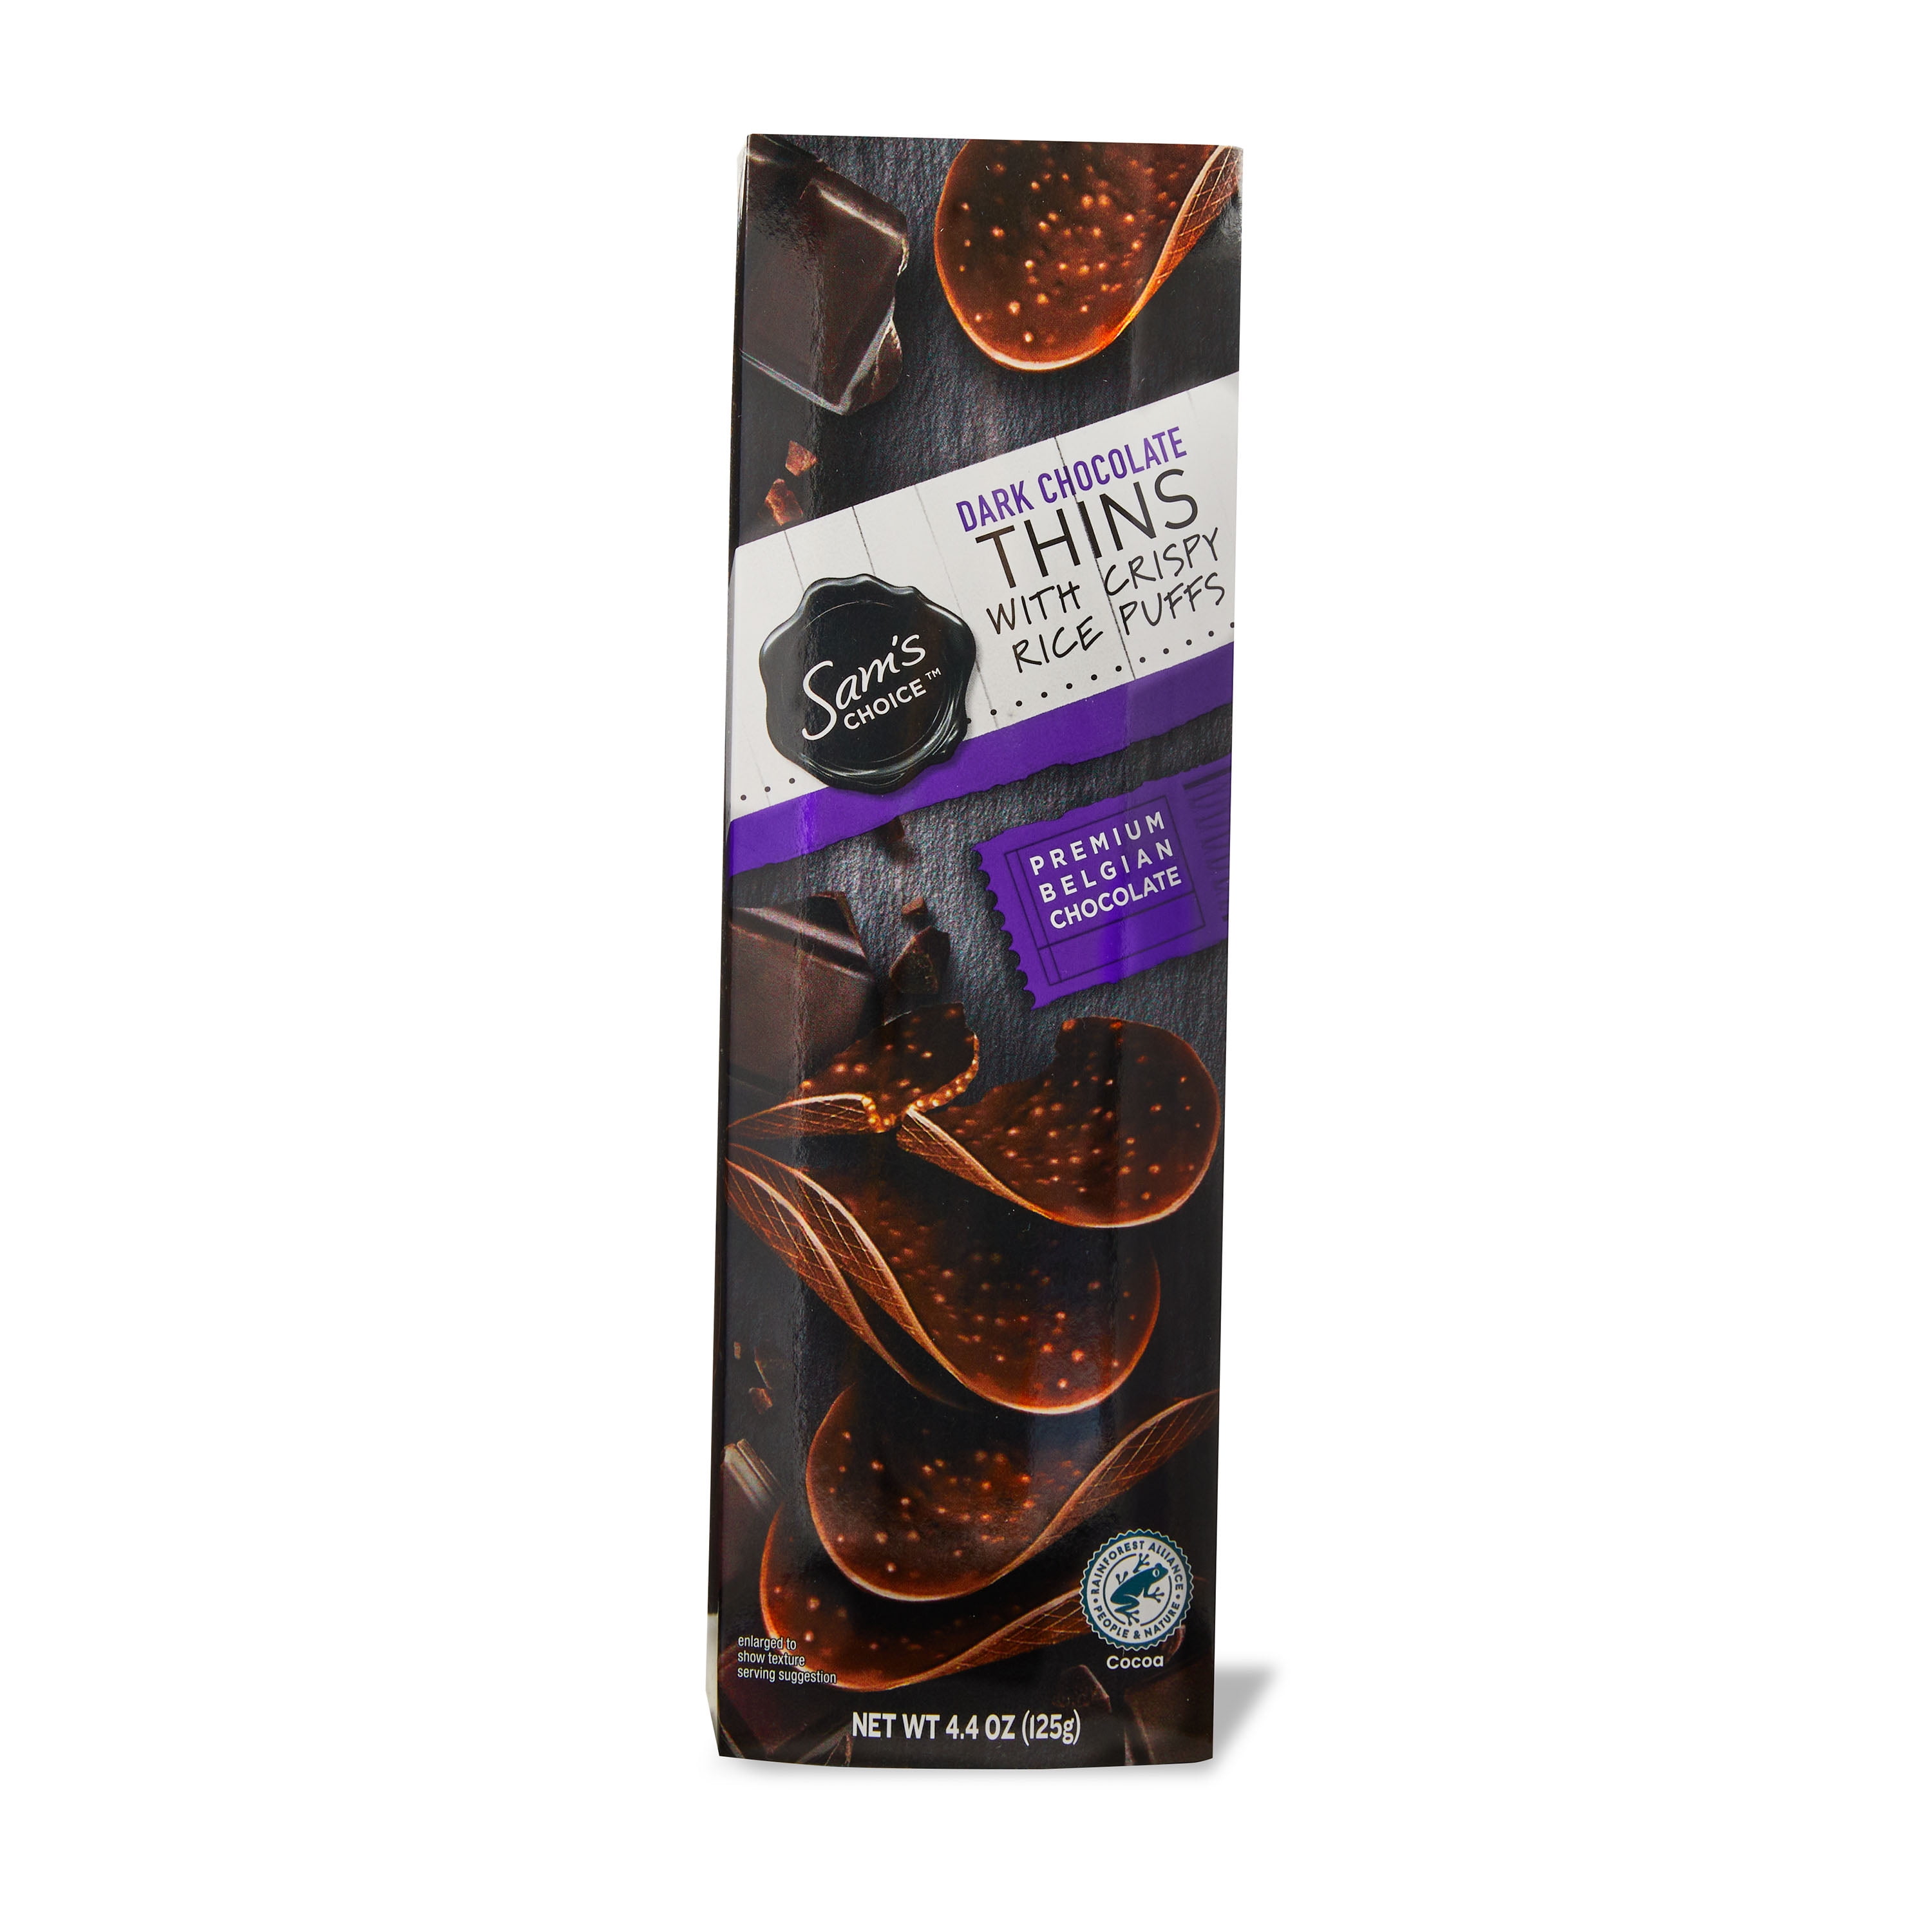 Sam's Choice Dark Chocolate Thins with Crispy Rice Puffs, 4.4 oz